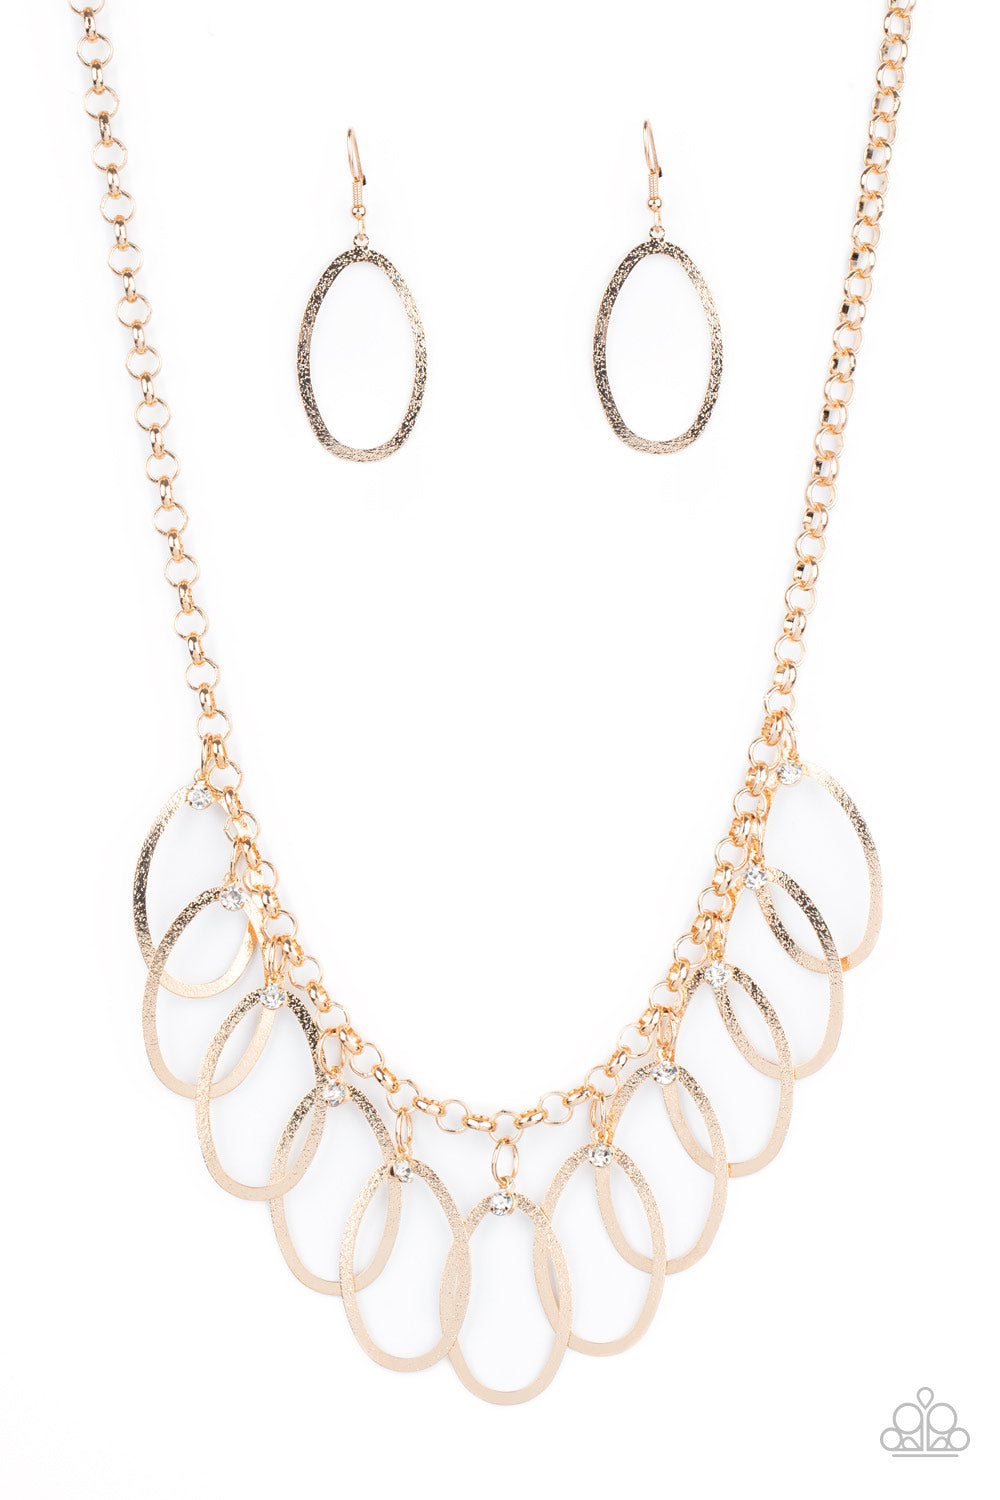 Double OVAL-time - Gold Necklace Set - Princess Glam Shop